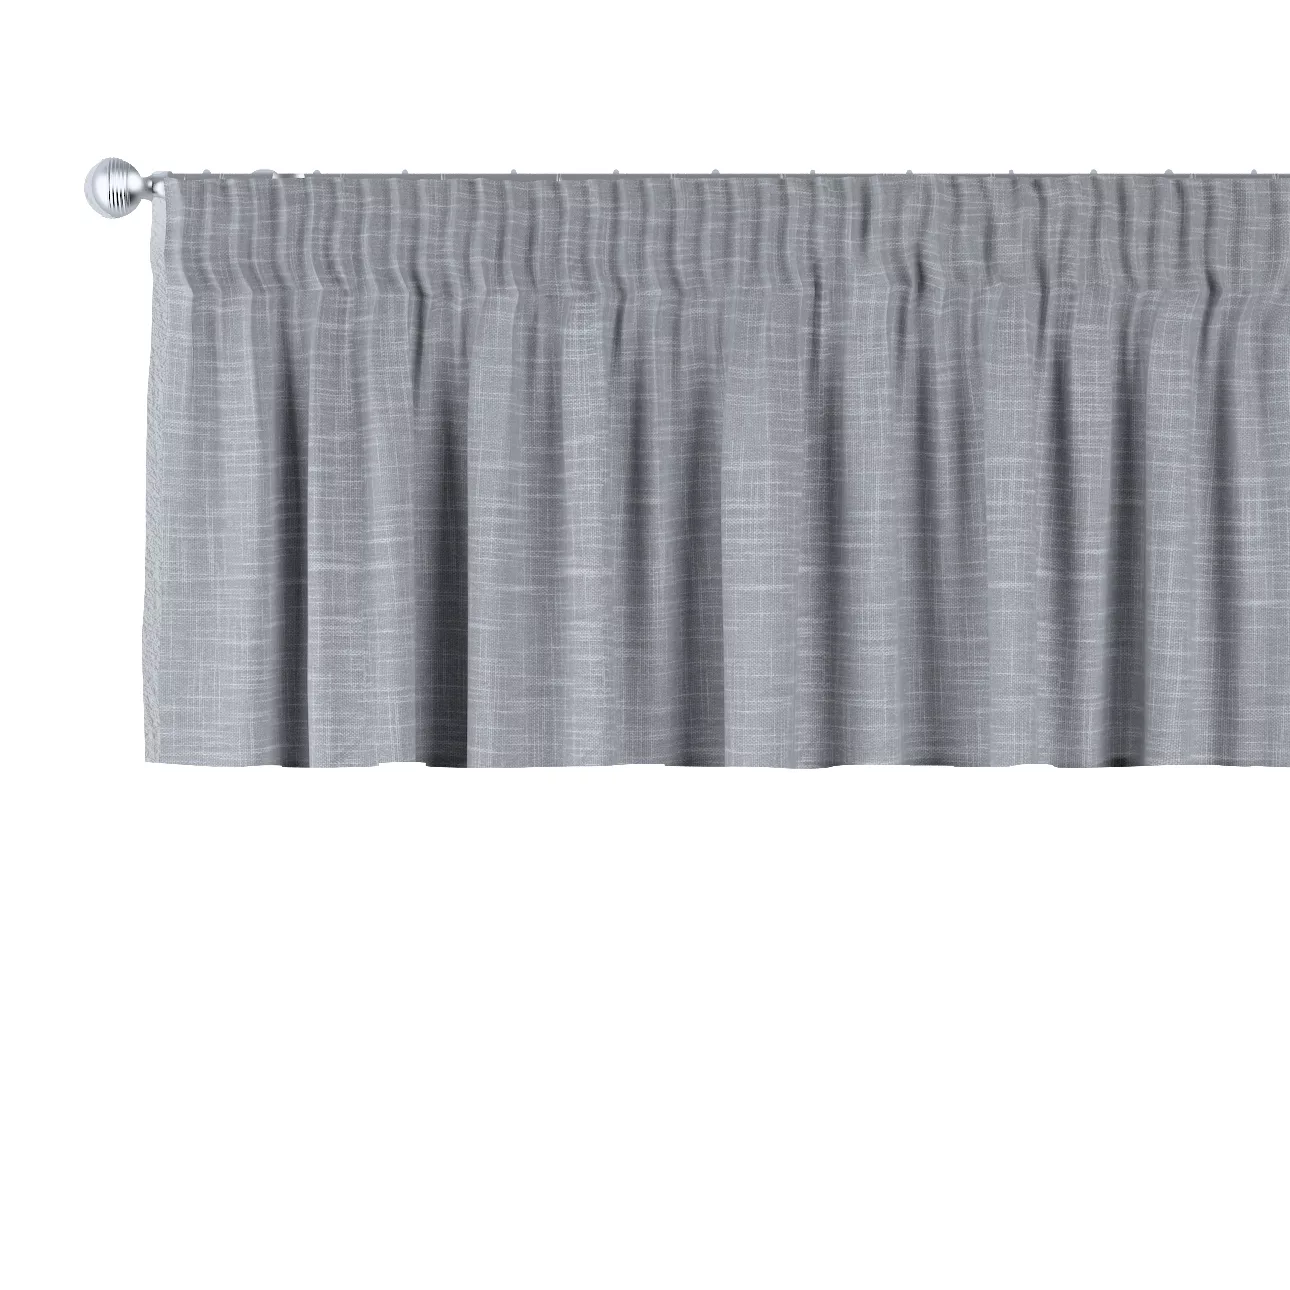 Kurzgardine mit Kräuselband, grau, 260 x 40 cm, Harmony (144-78) günstig online kaufen